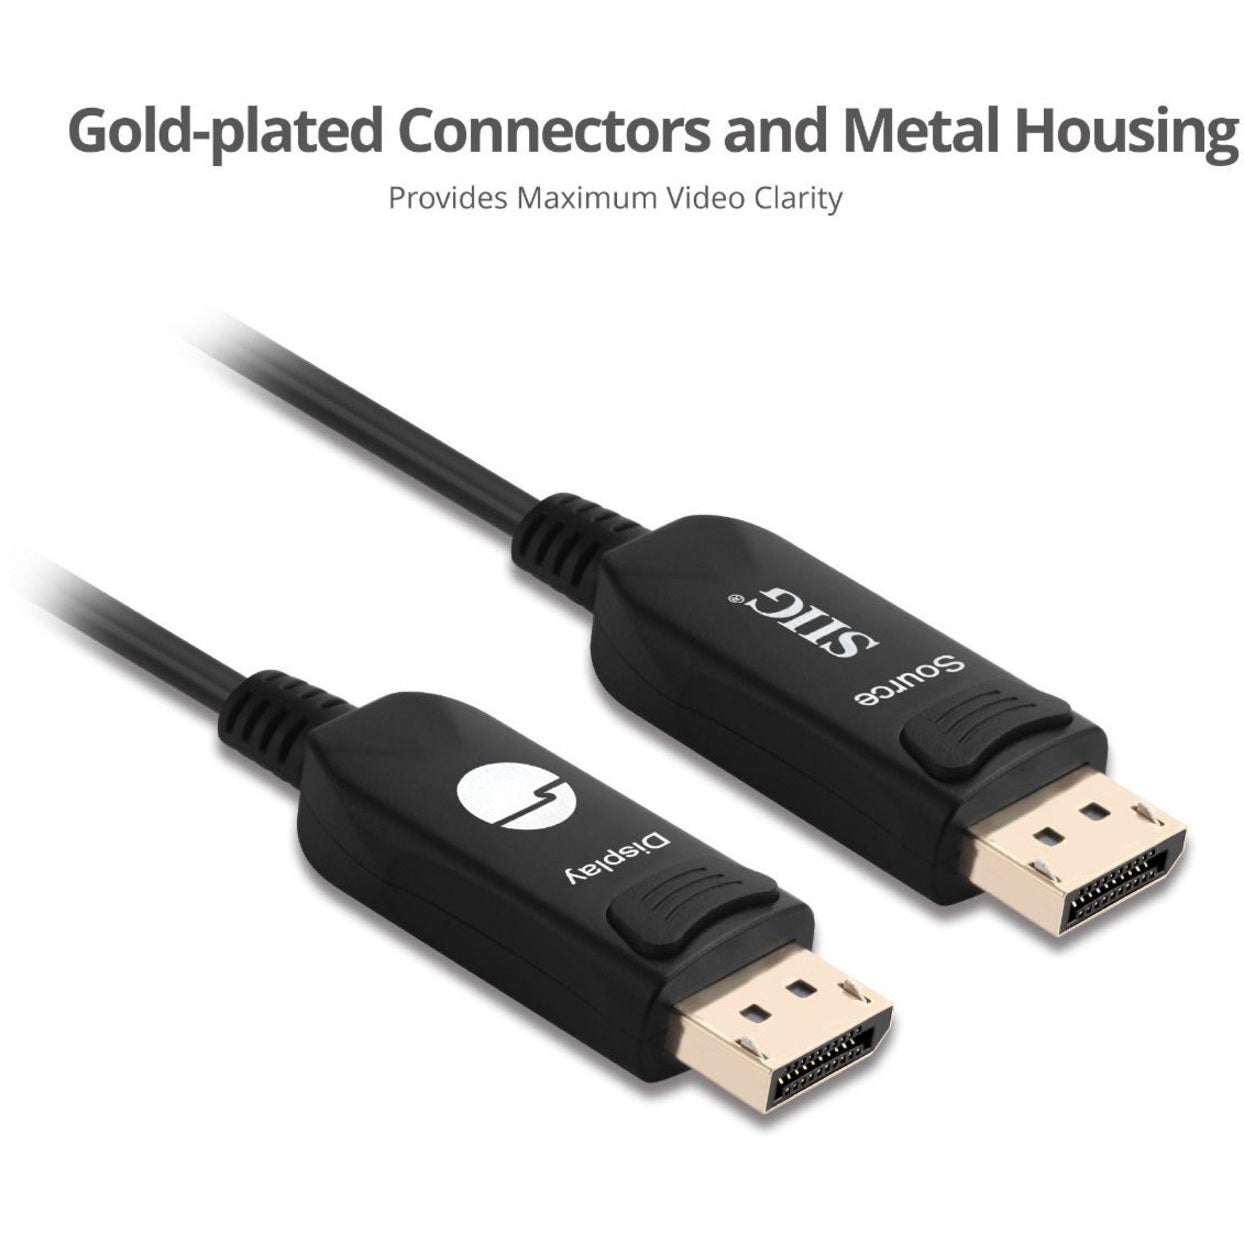 SIIG CB-DP2311-S1 4K DisplayPort 1.2 AOC Cable - 20M, Plug & Play, 65.62 ft Fiber Optic Cable